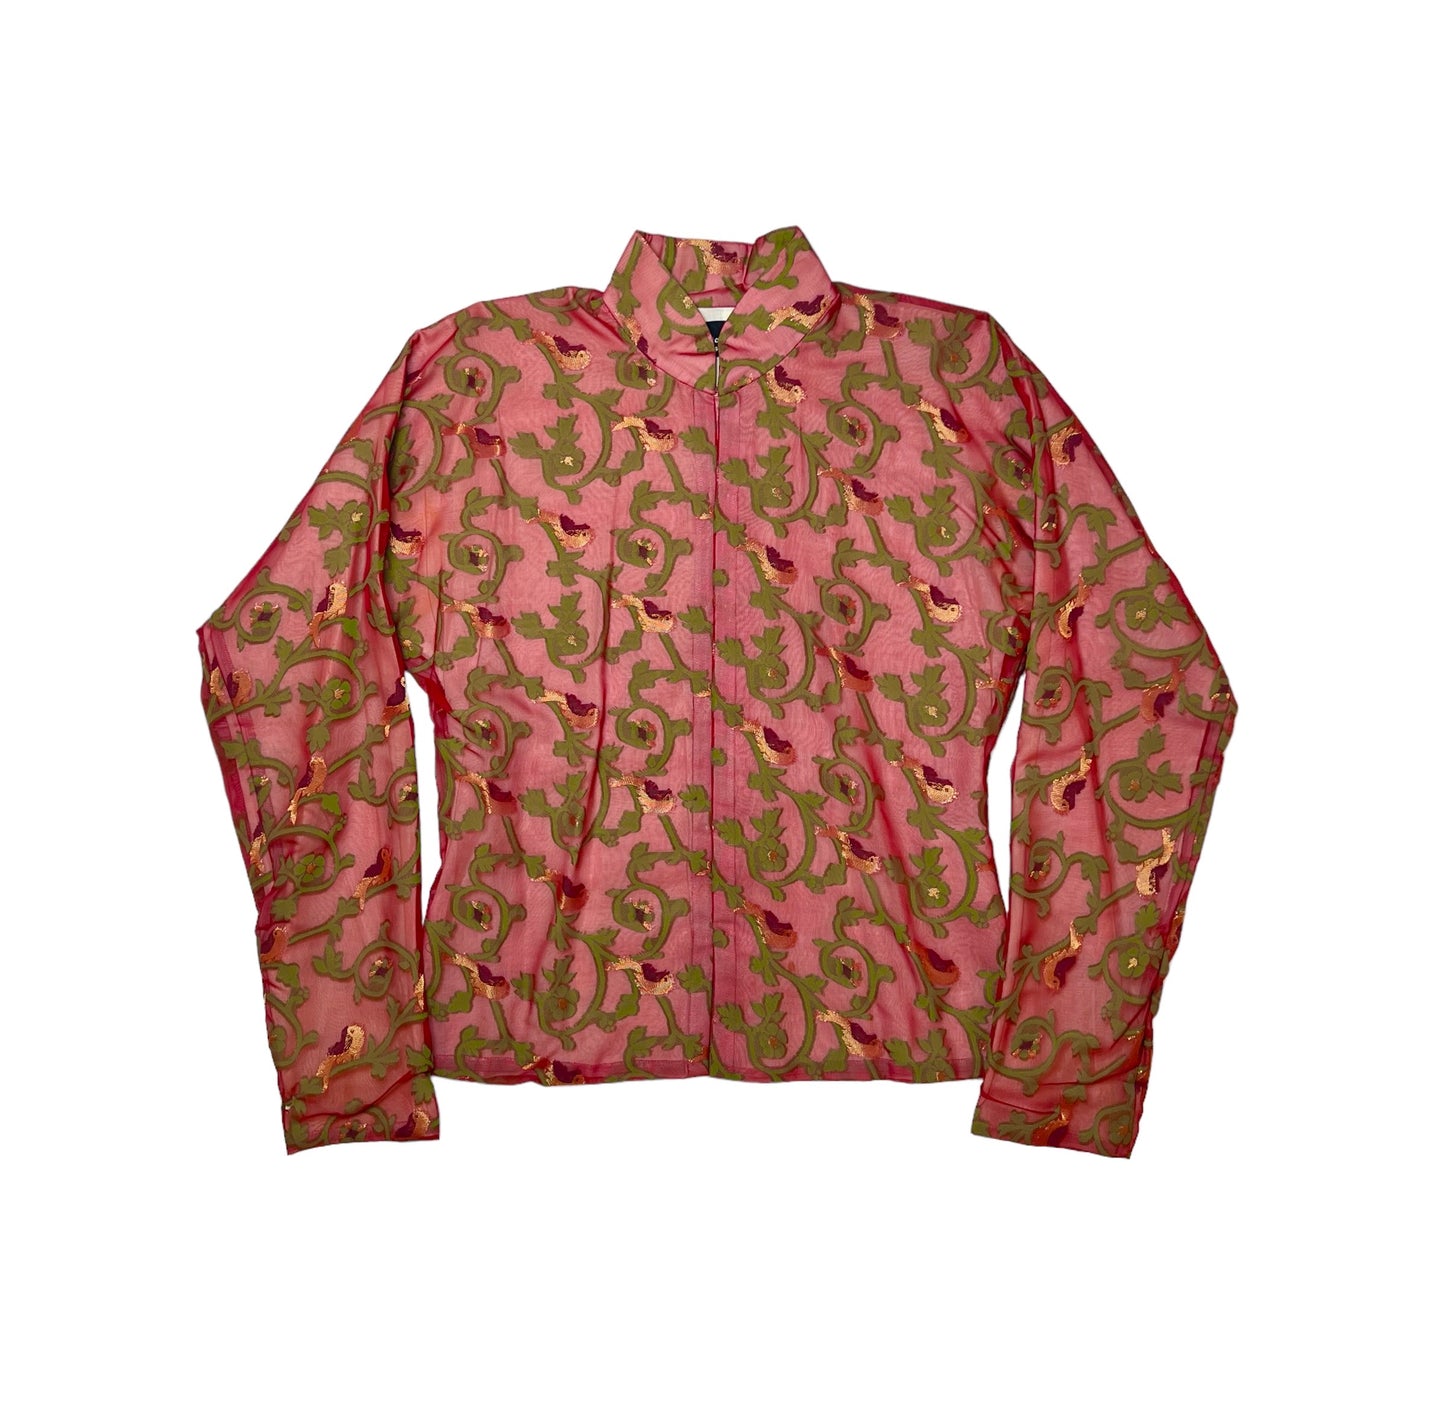 1997 Tricot COMME des GARÇONS embroidered sheer jacket